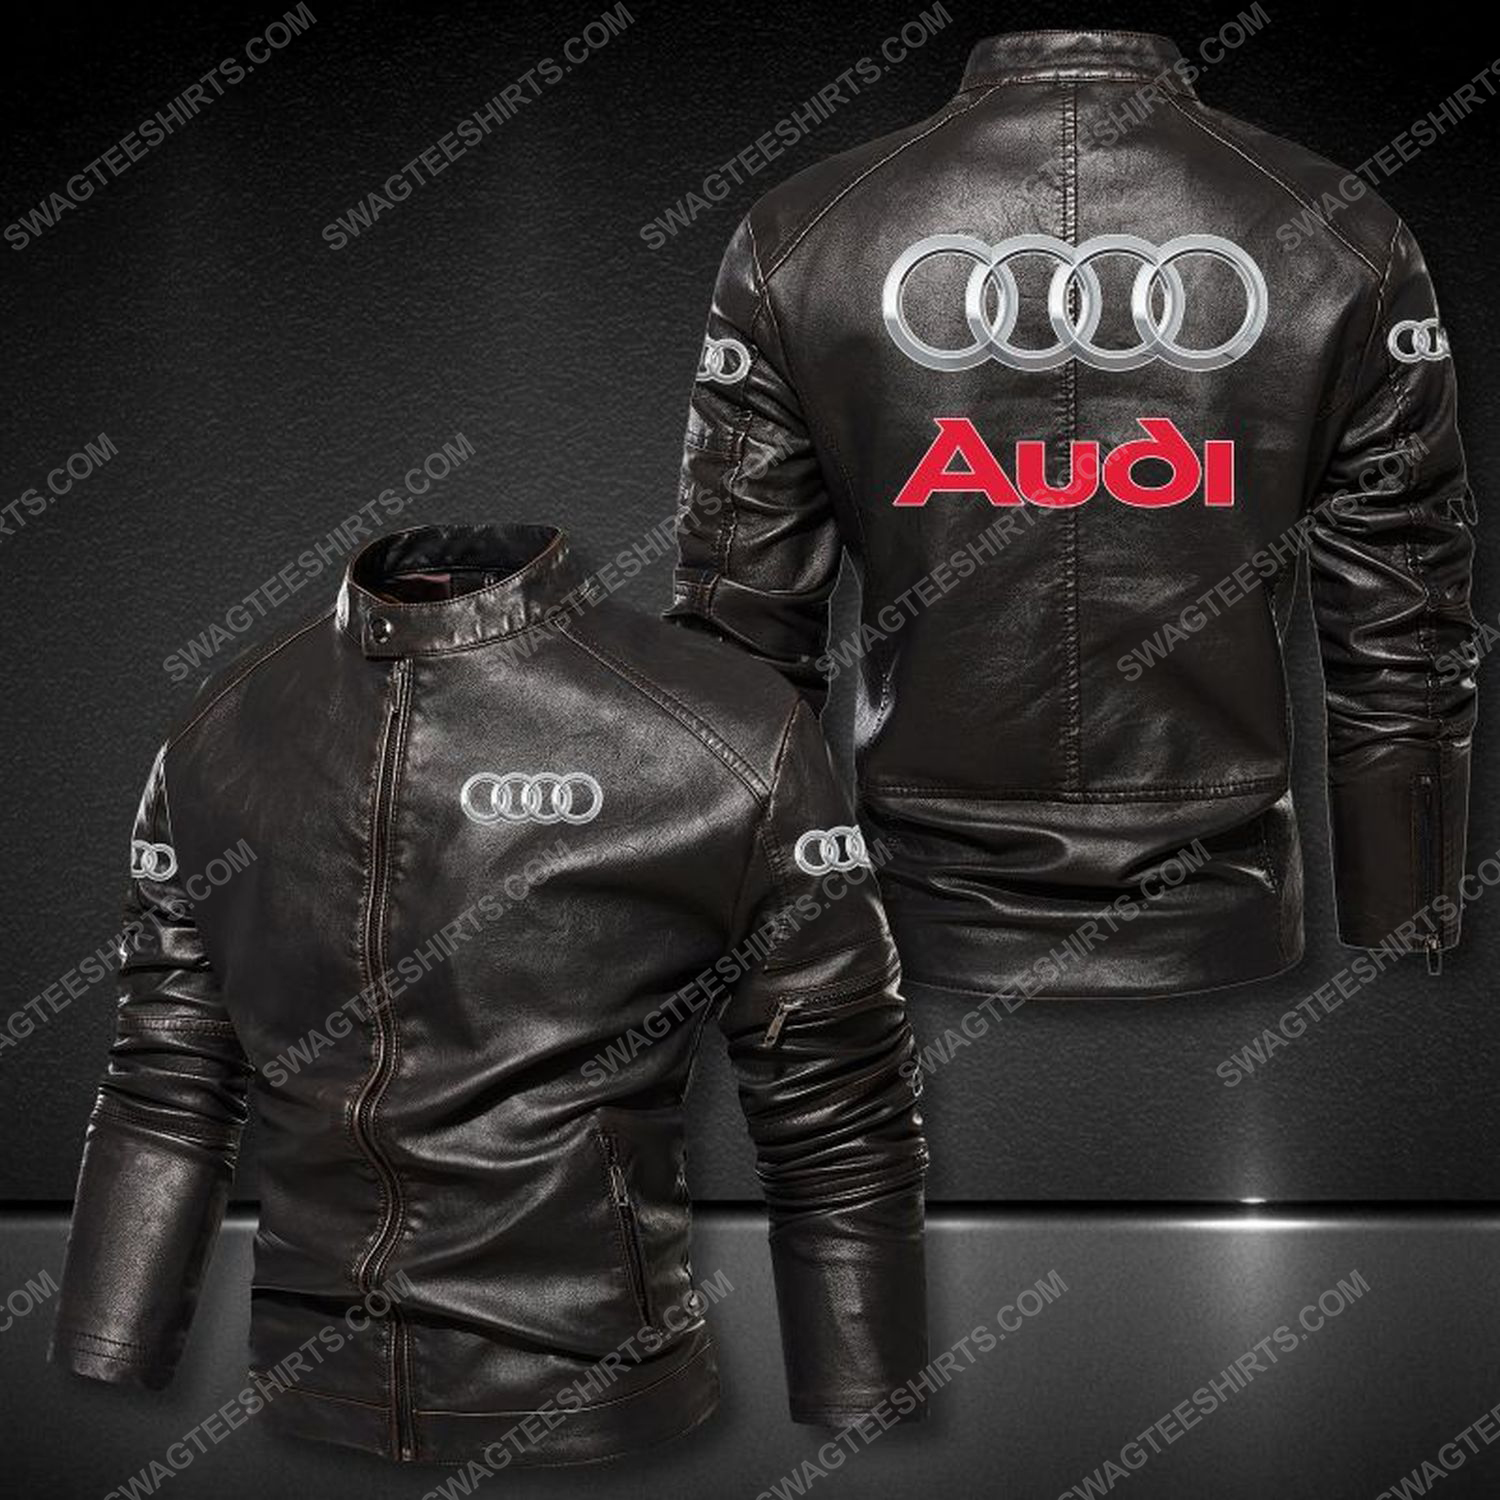 Audi sports cars leather jacket 1 - Copy